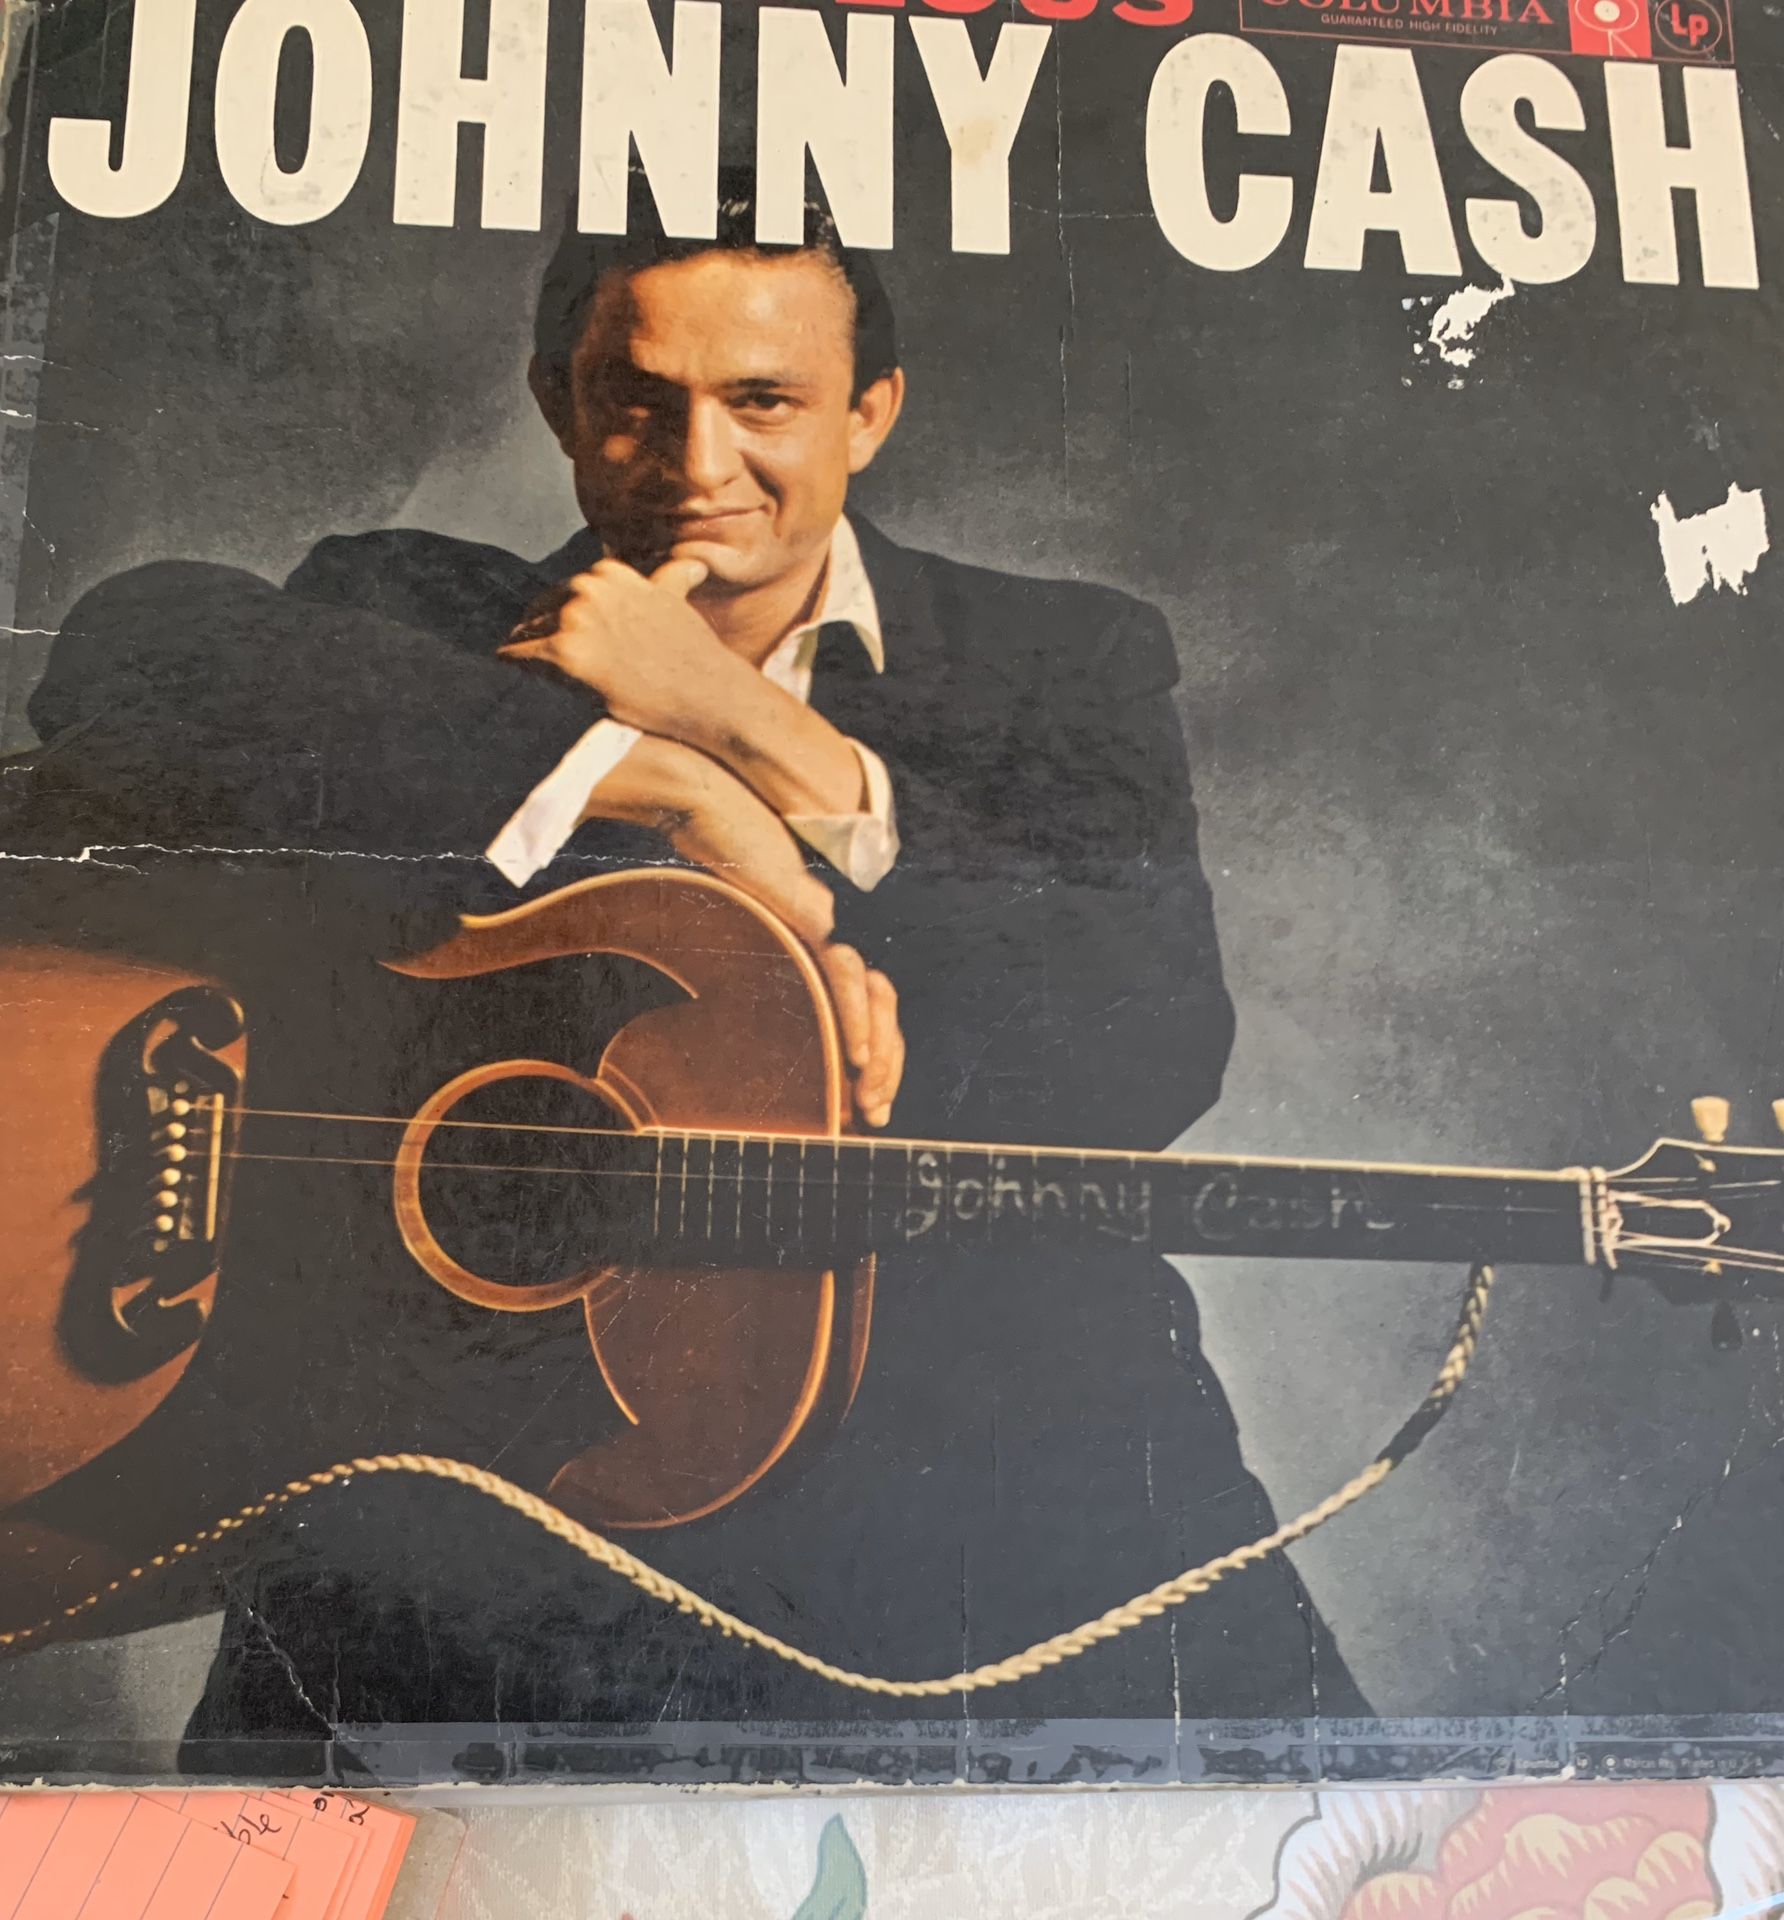 The Fabulous Johnny Cash enjoyable music vinyl